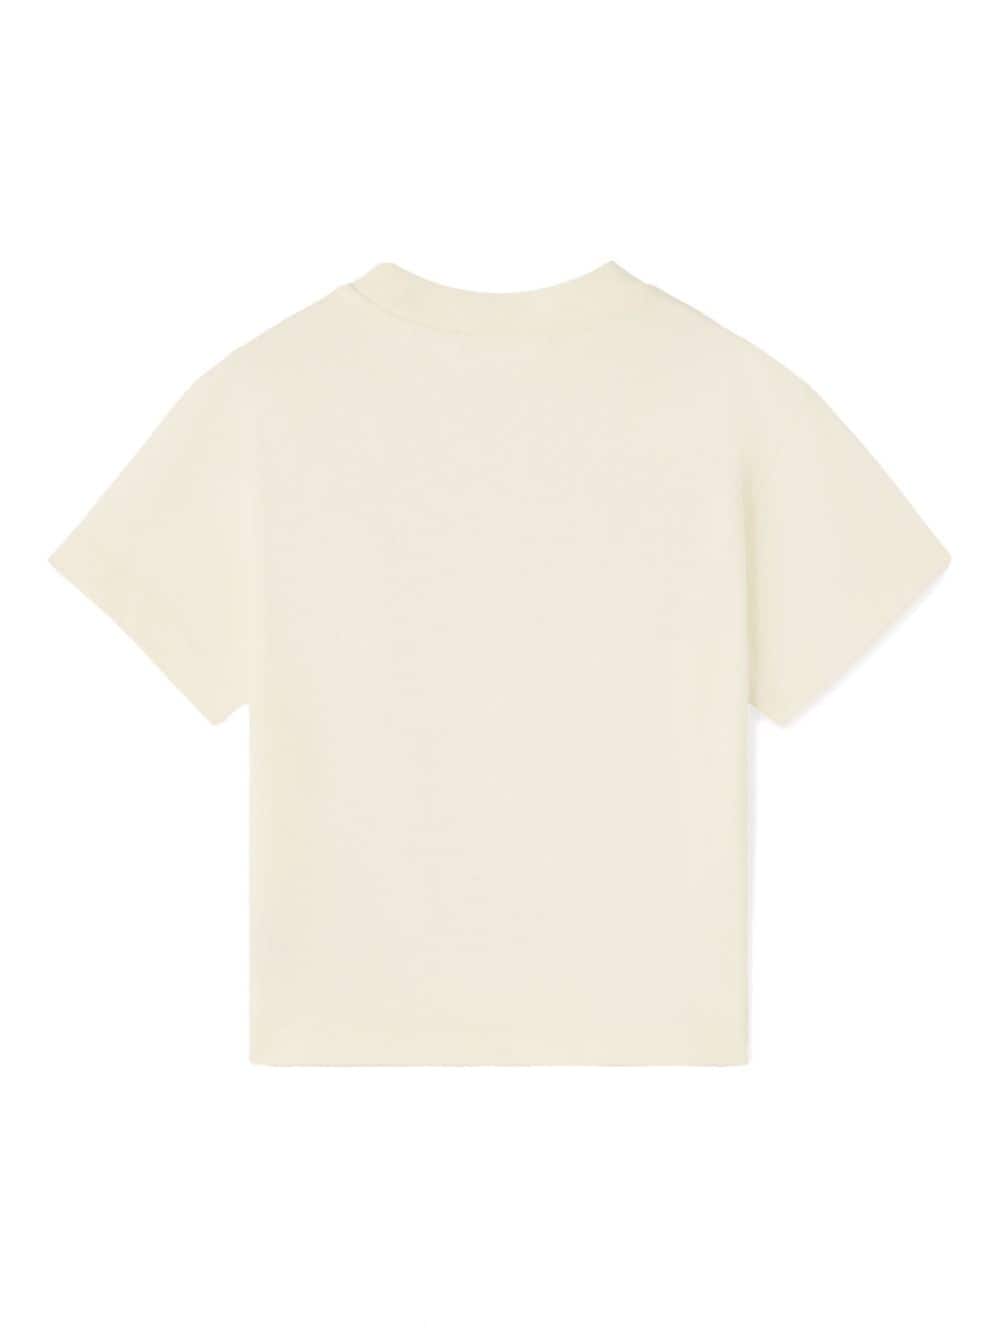 Cream cotton t-shirt for girls